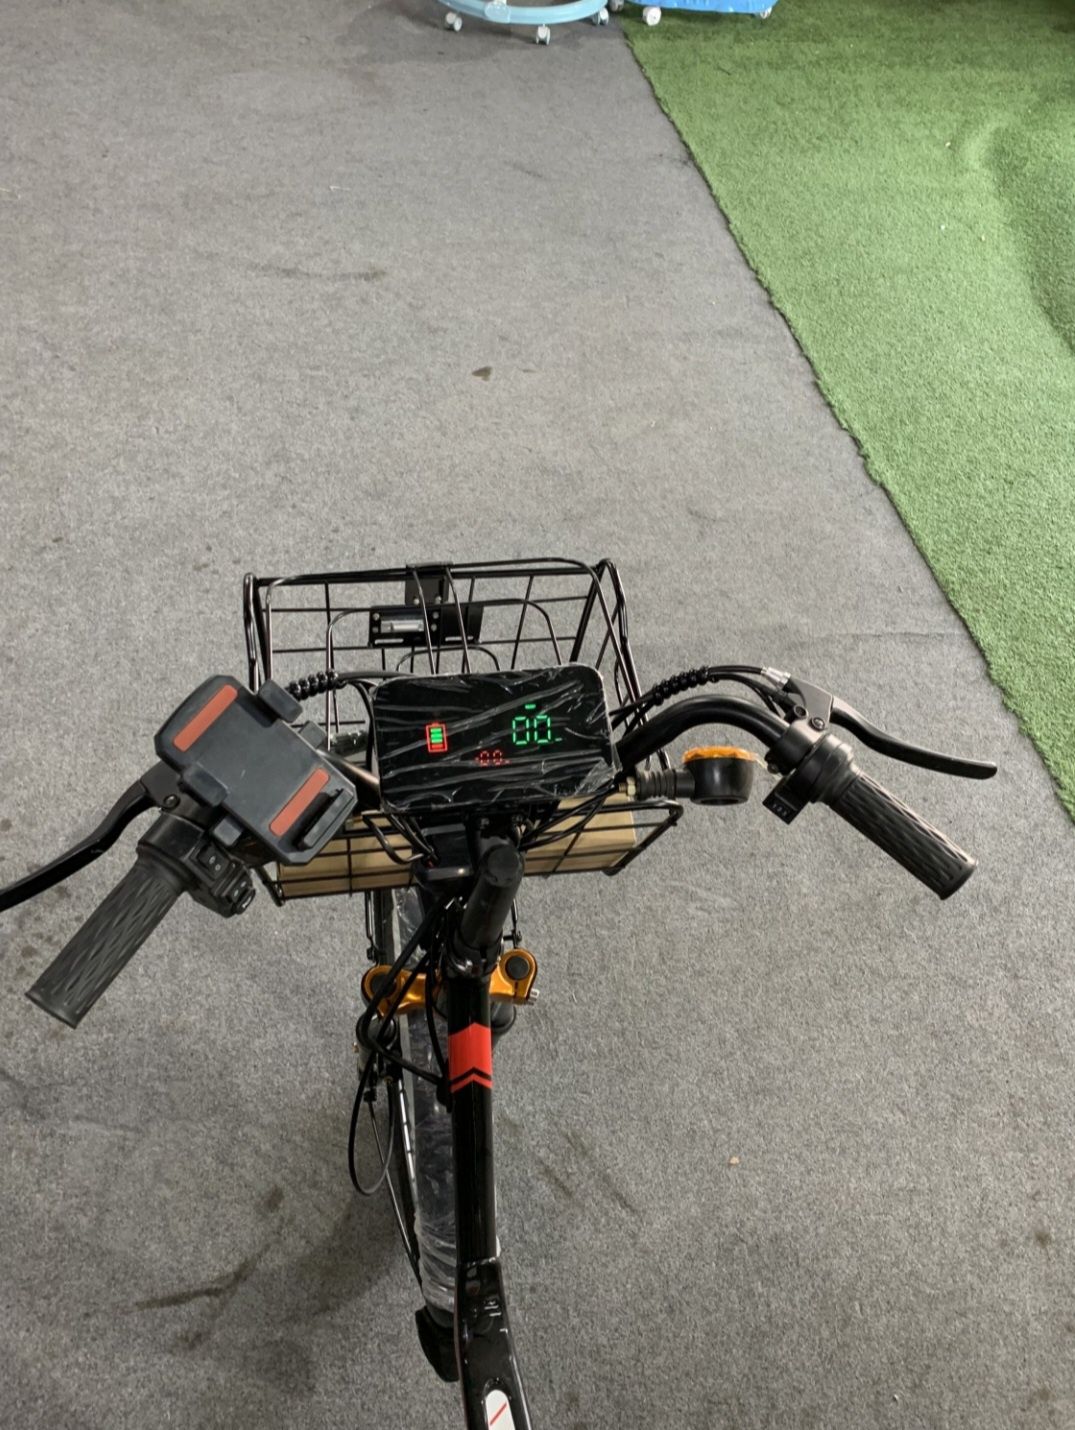 электро велосипед оптом/дона СКИДКА велоскутер